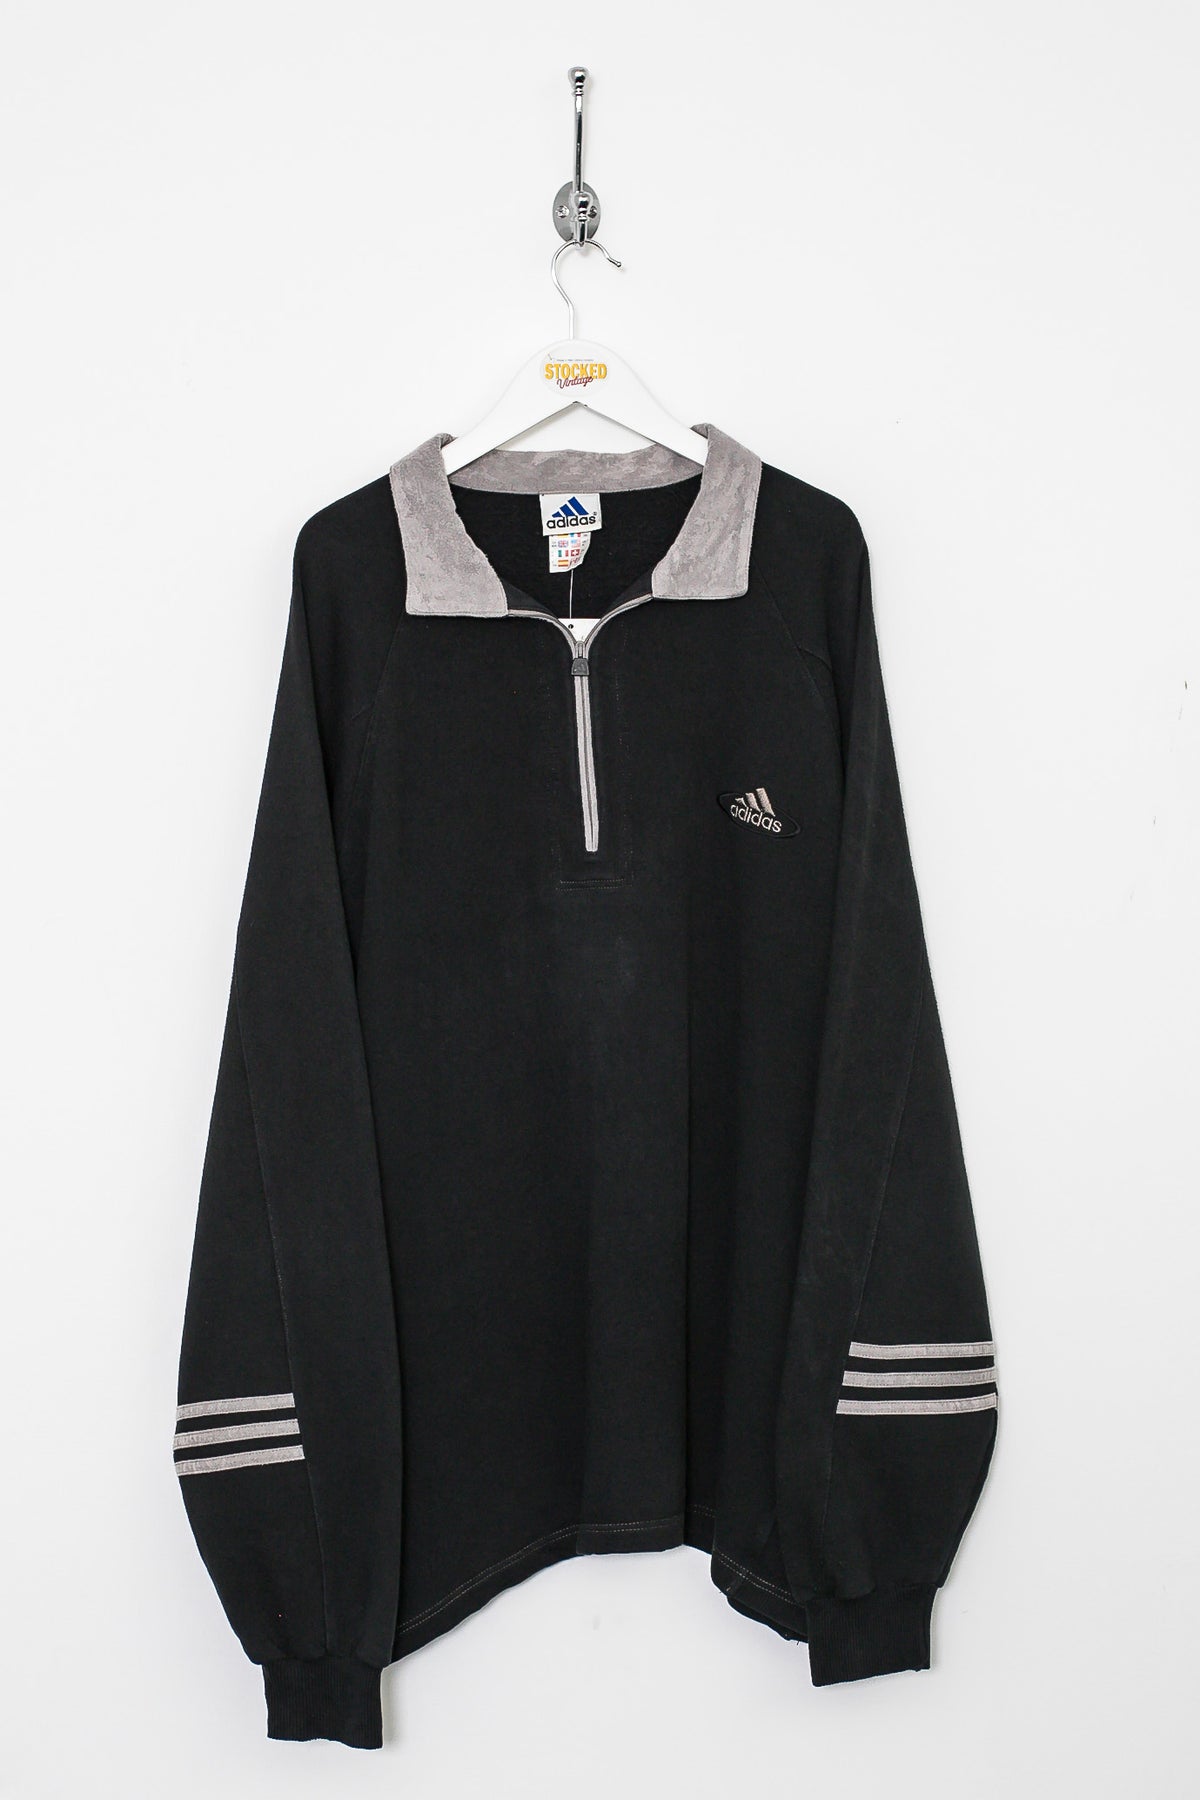 90s Adidas 1/4 Zip Sweatshirt (XL)